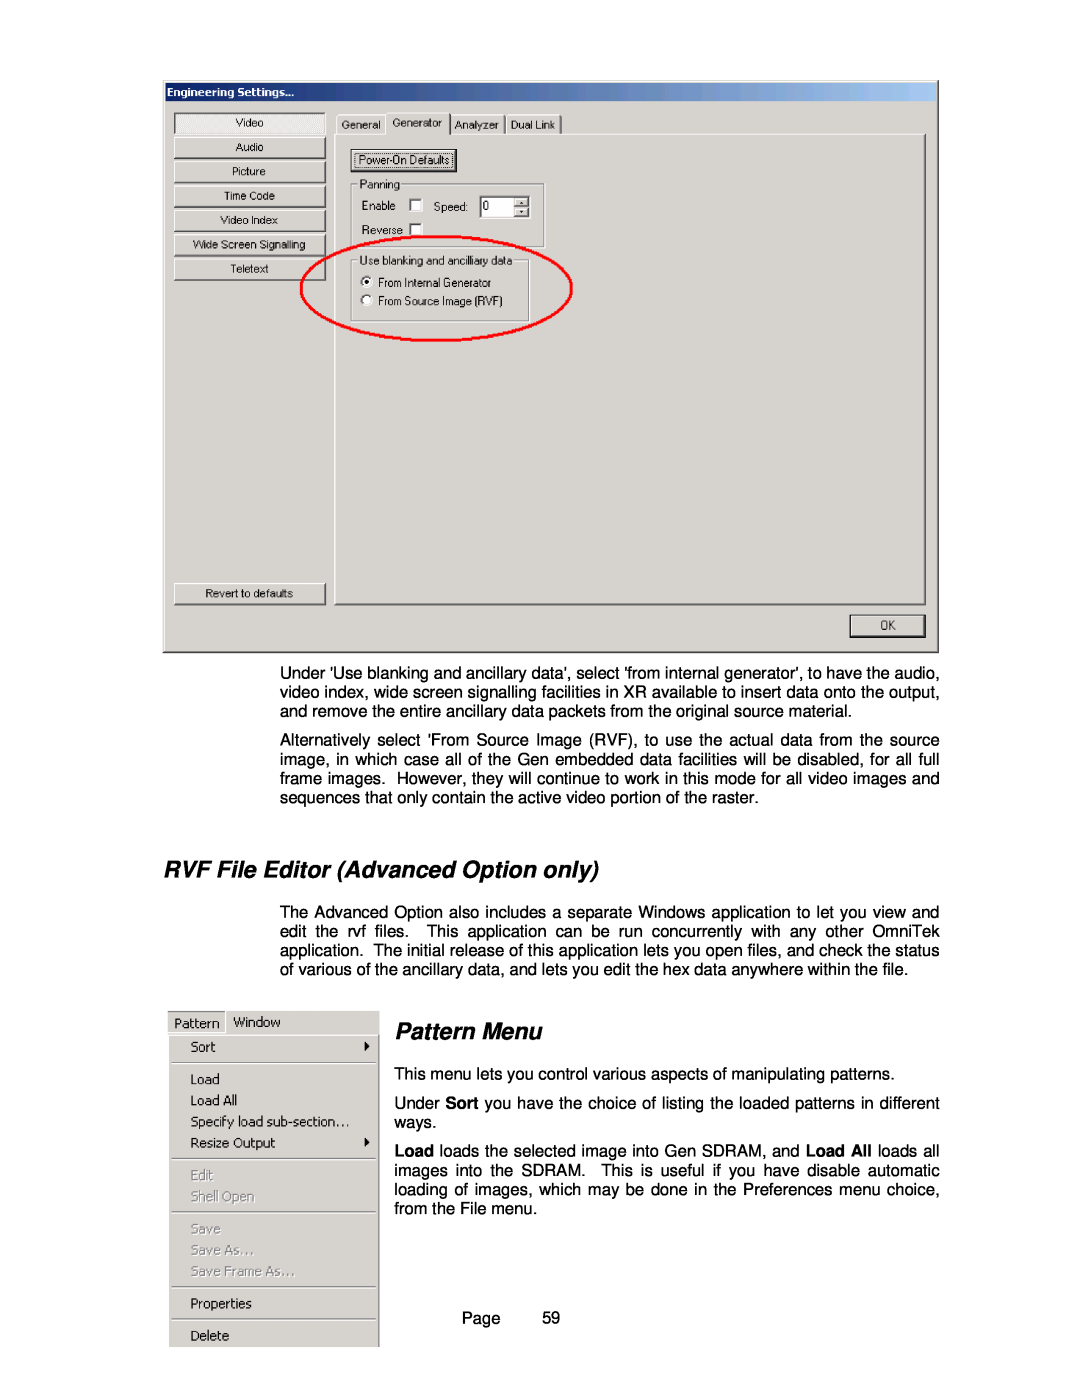 OmniTek OmniTek XR manual RVF File Editor Advanced Option only, Pattern Menu 